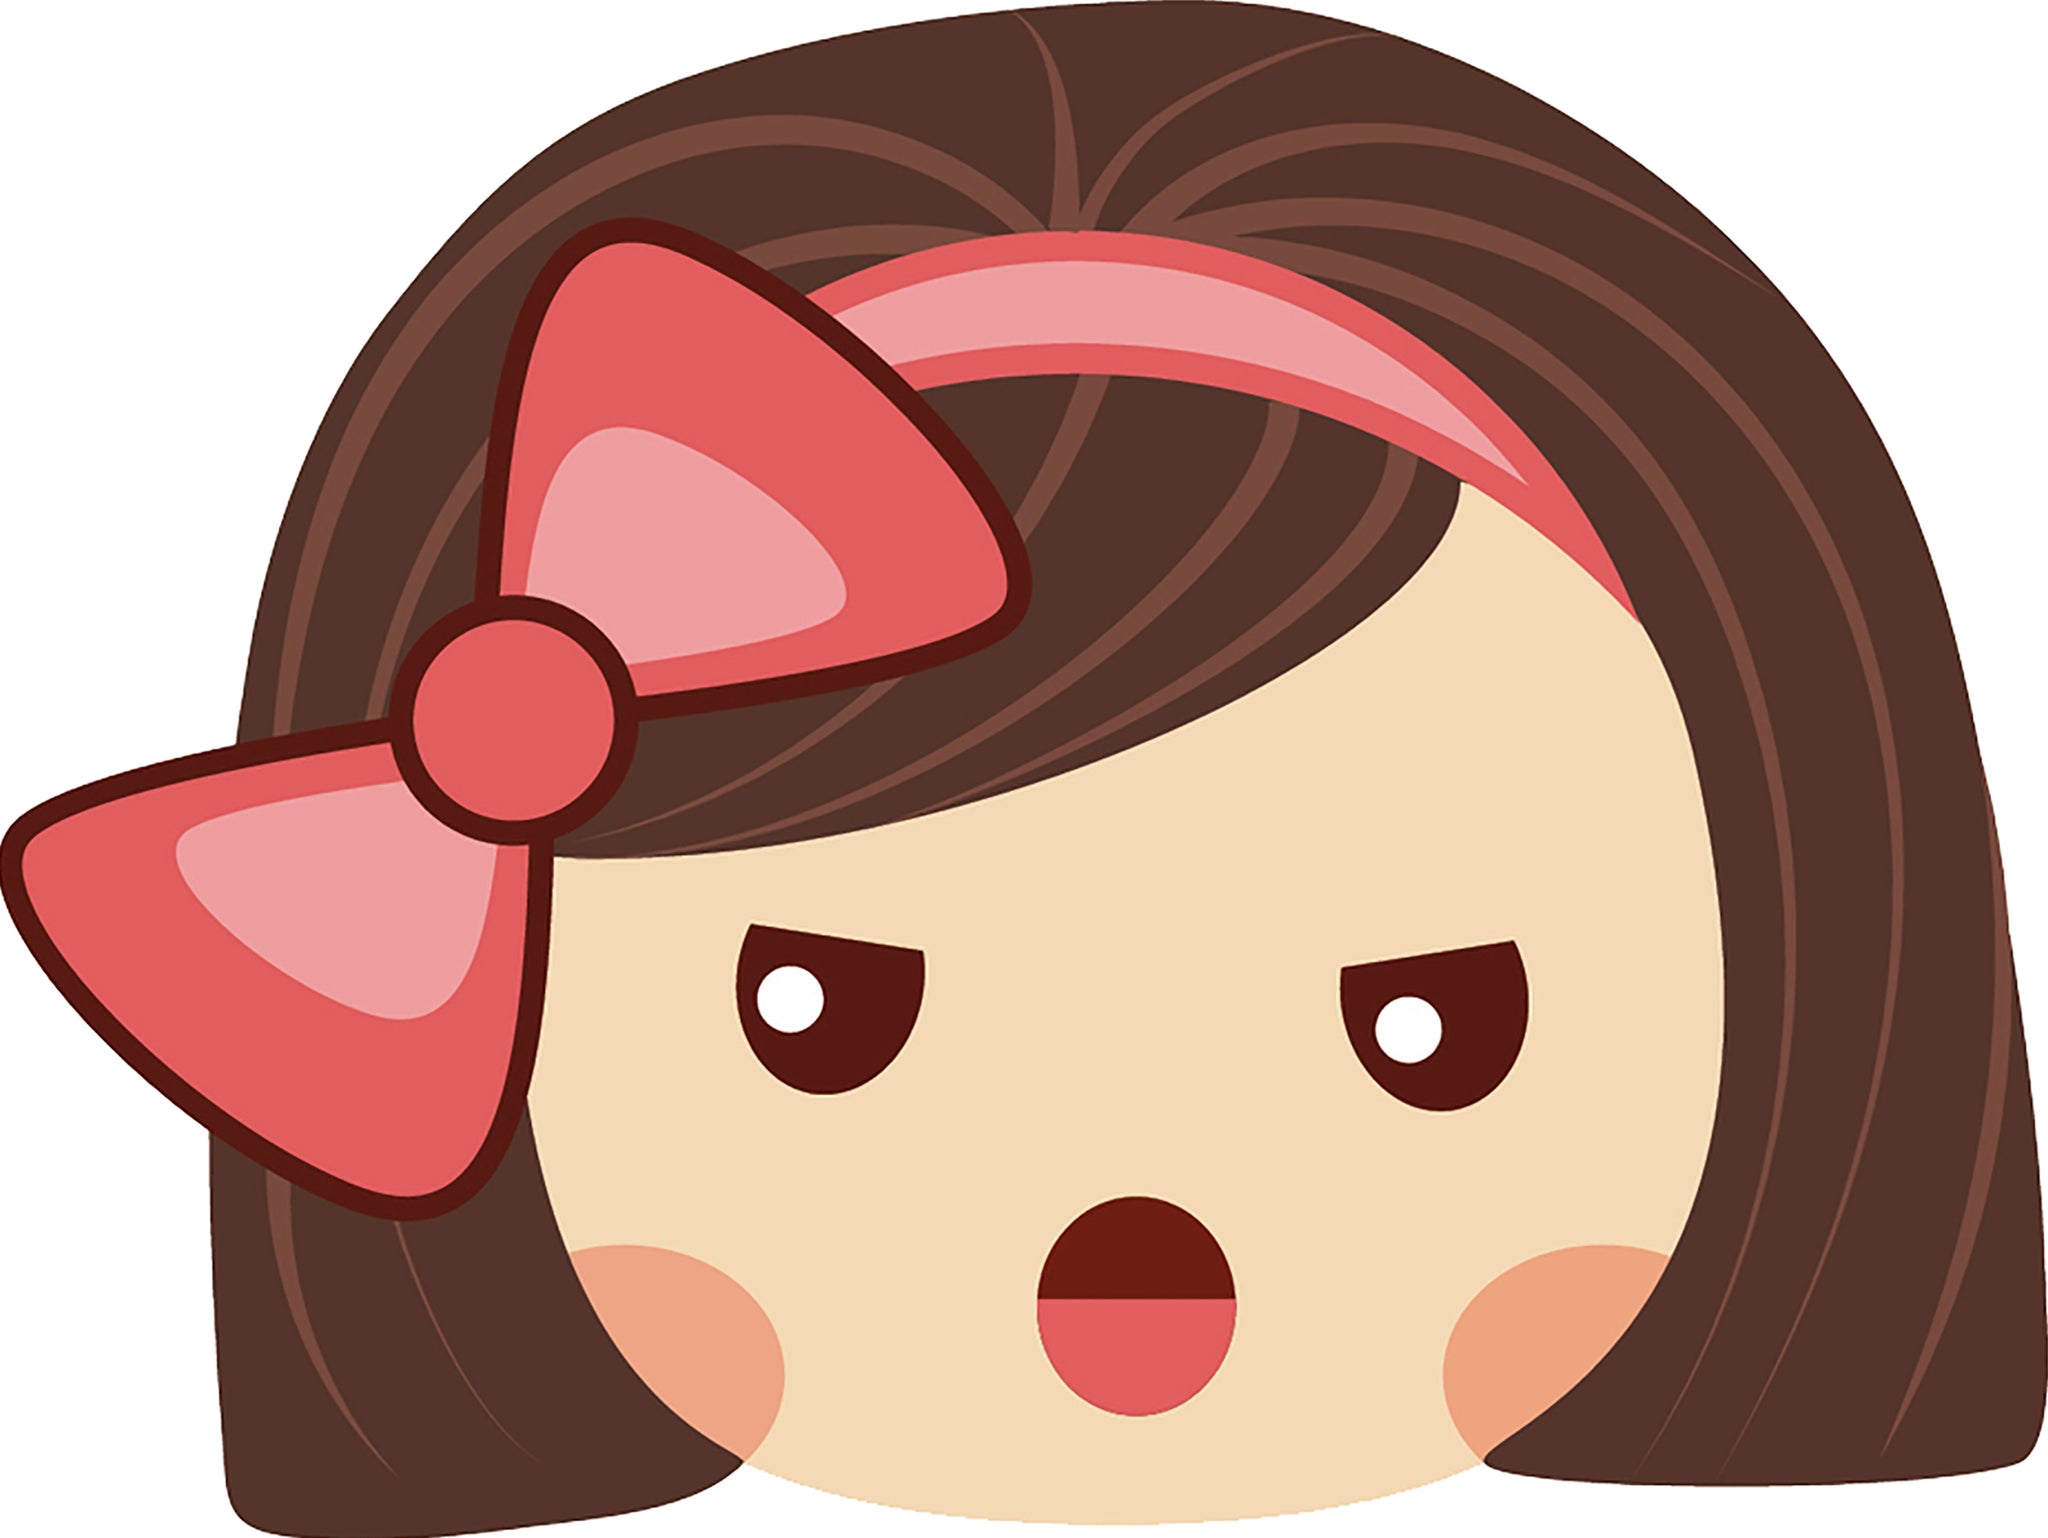 Sweet Little Kawaii School Girl with Pink Bow Emoji #3 Vinyl Decal Sticker